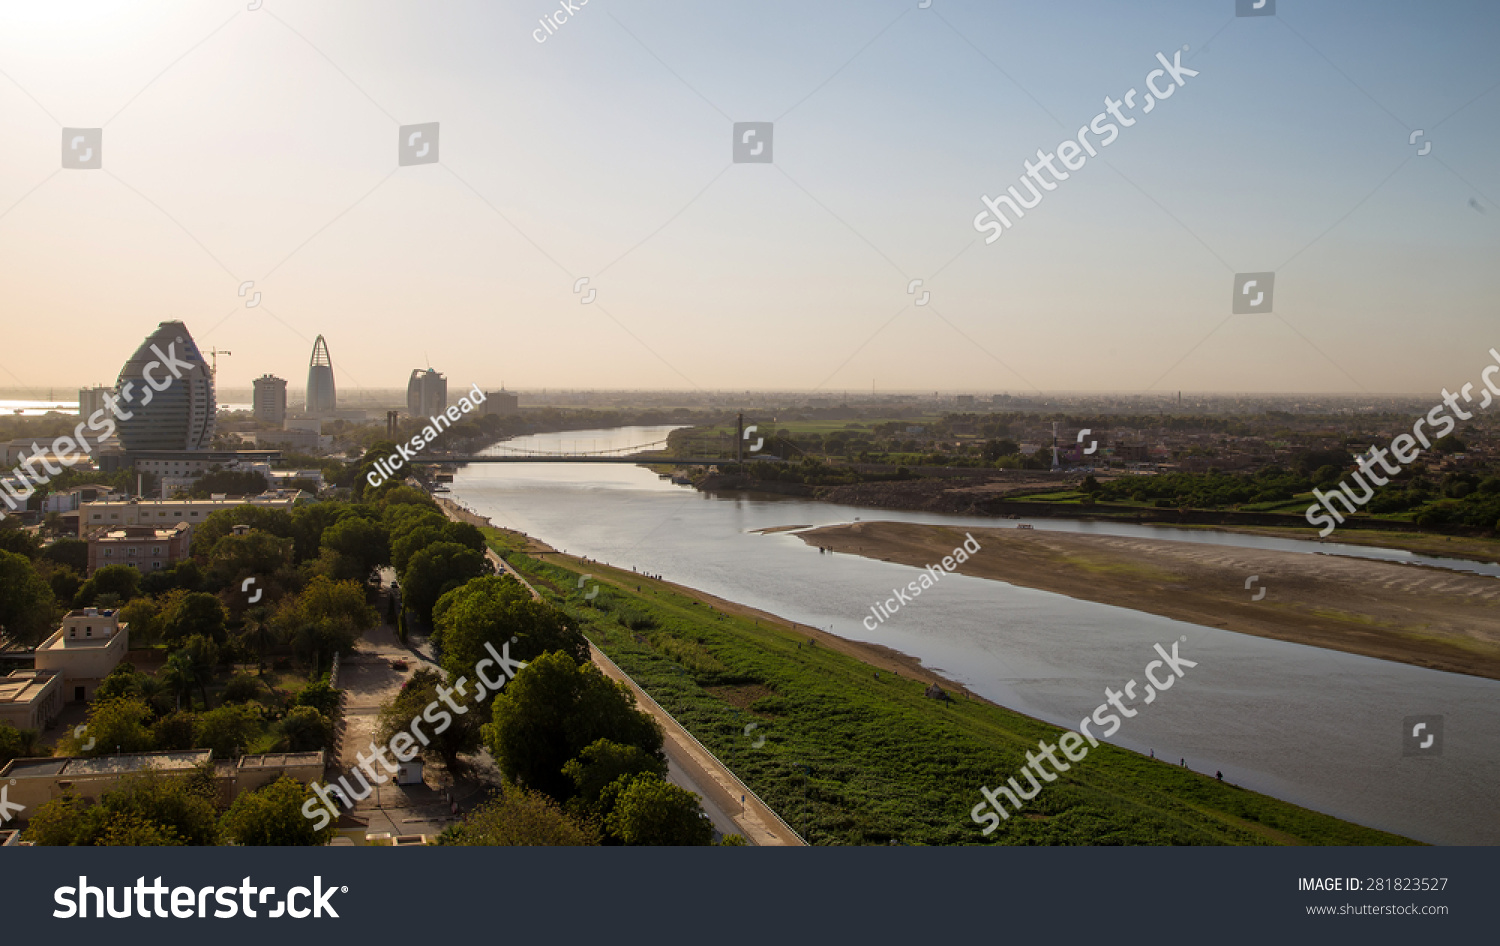 A  view of Nile river in Khartoum - Sudan